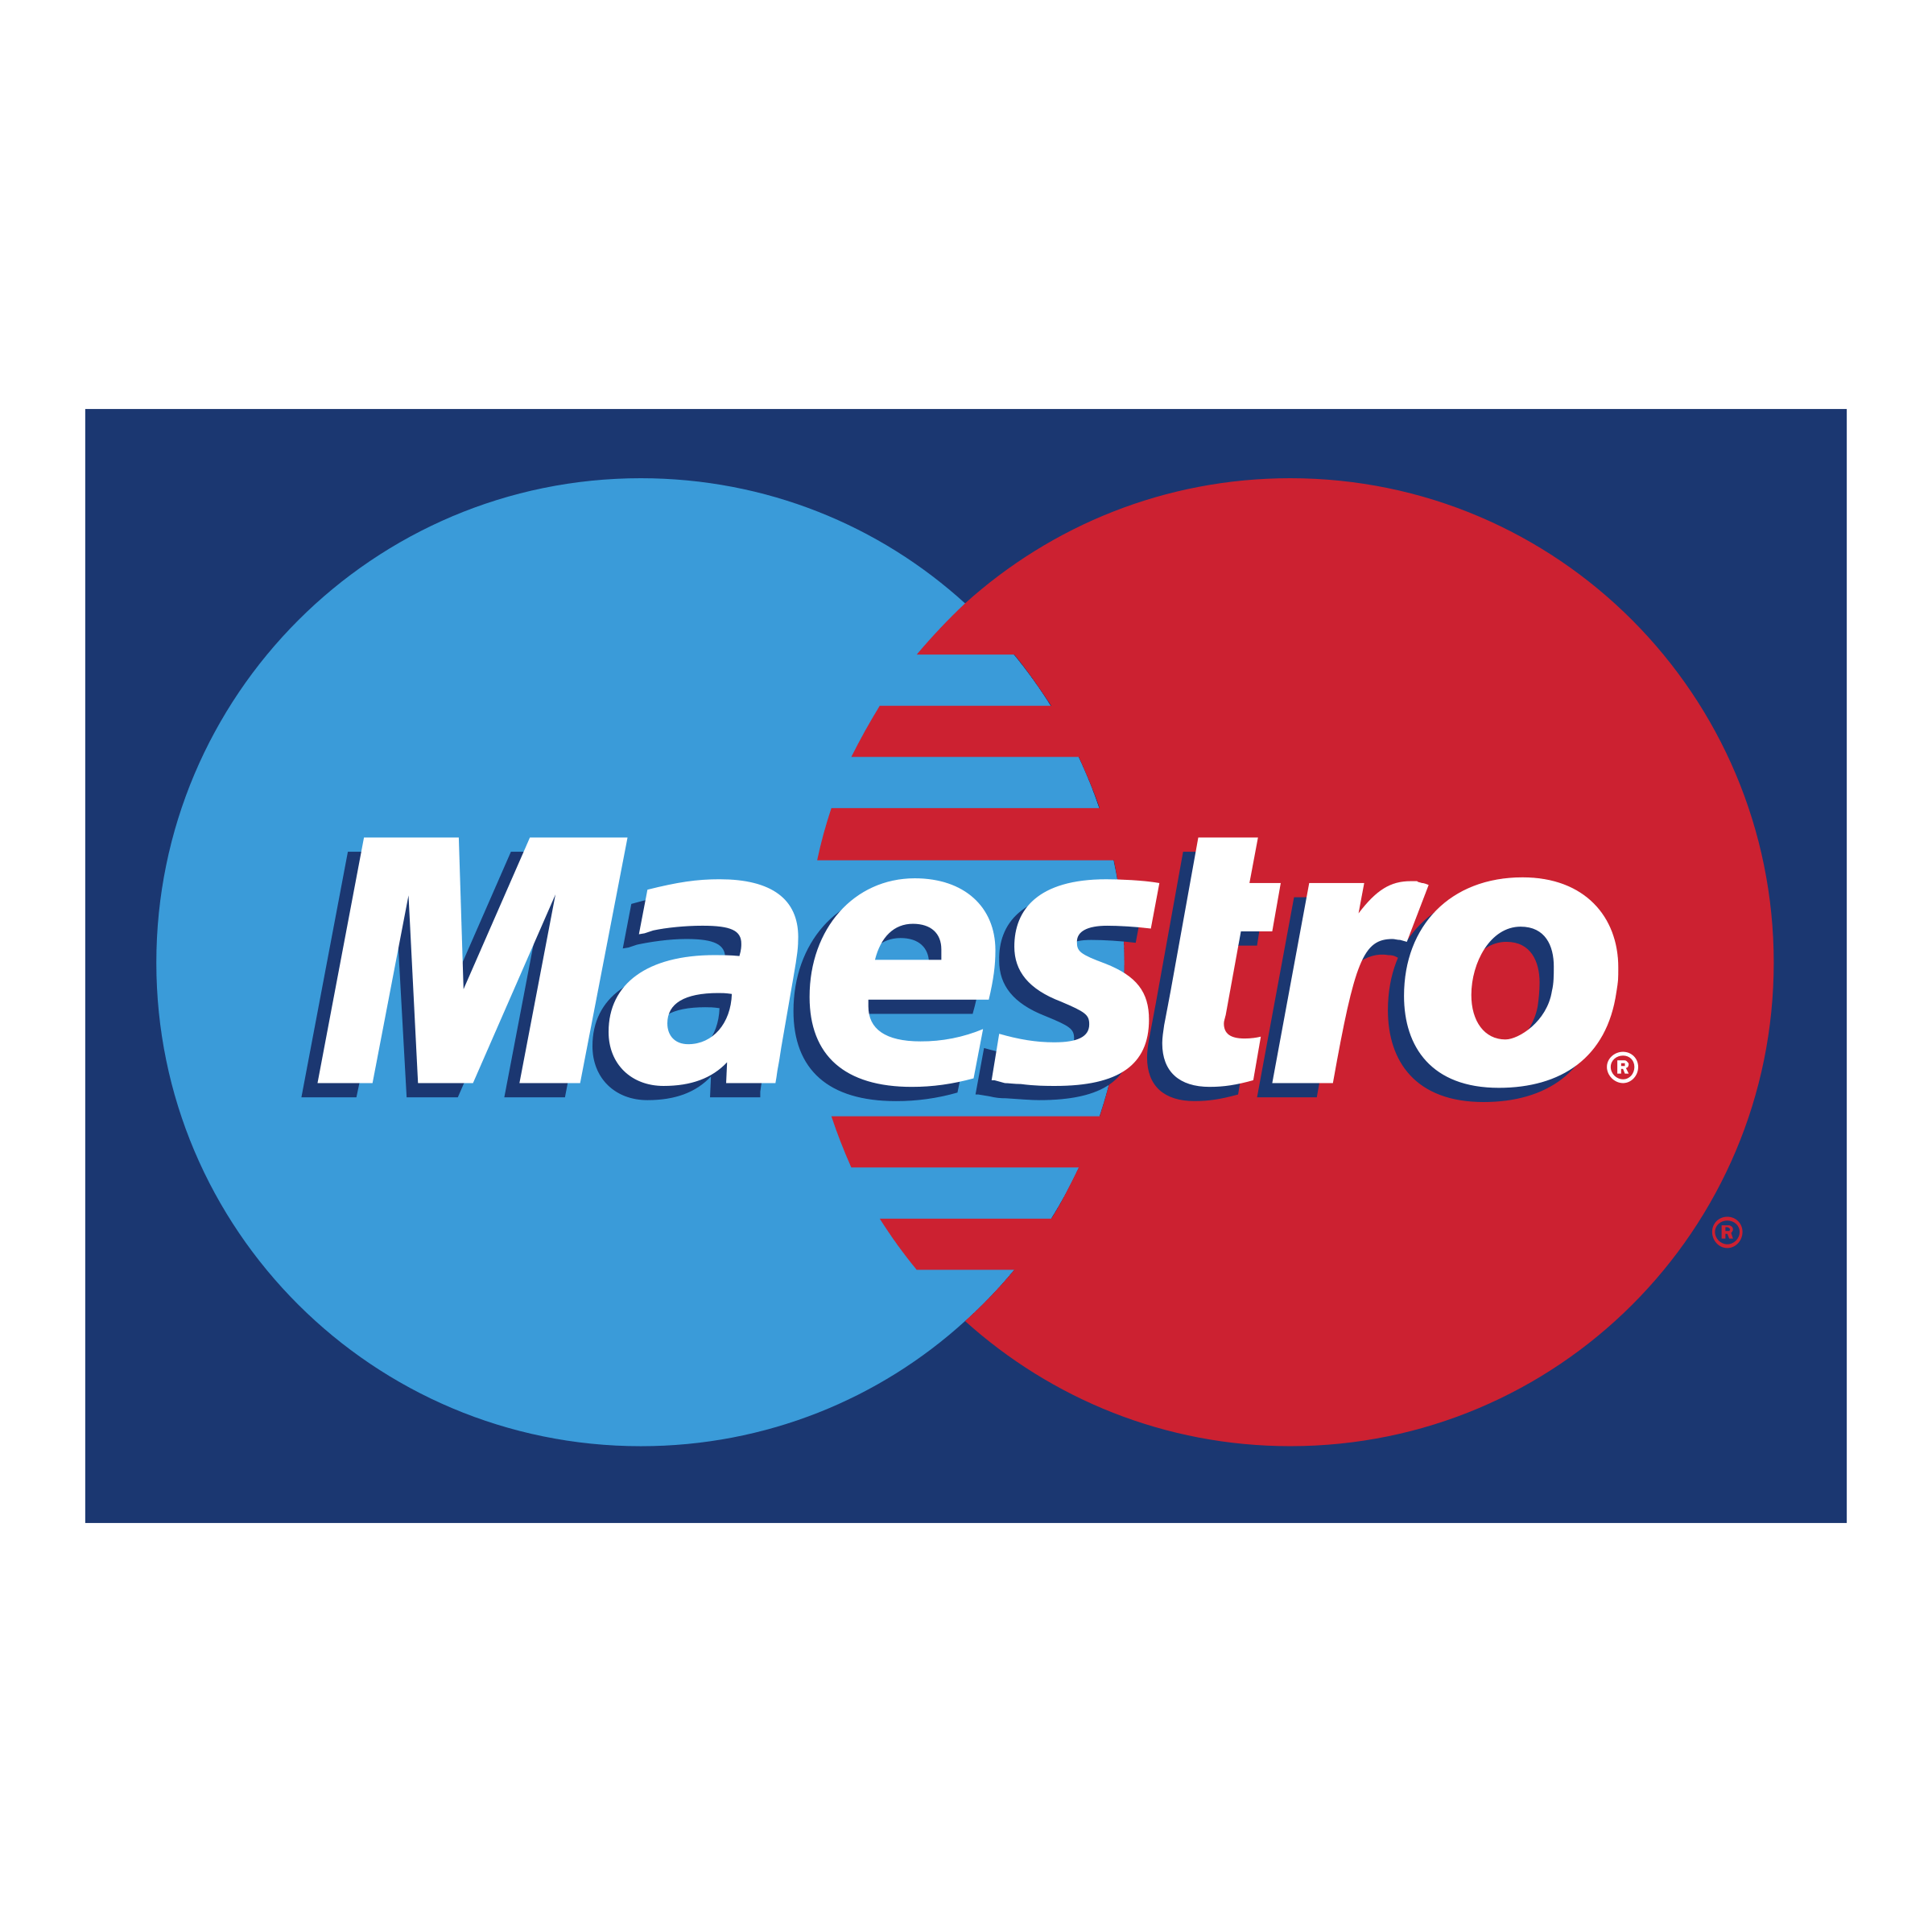 Maestro Logo - Maestro Logo PNG Transparent & SVG Vector - Freebie Supply